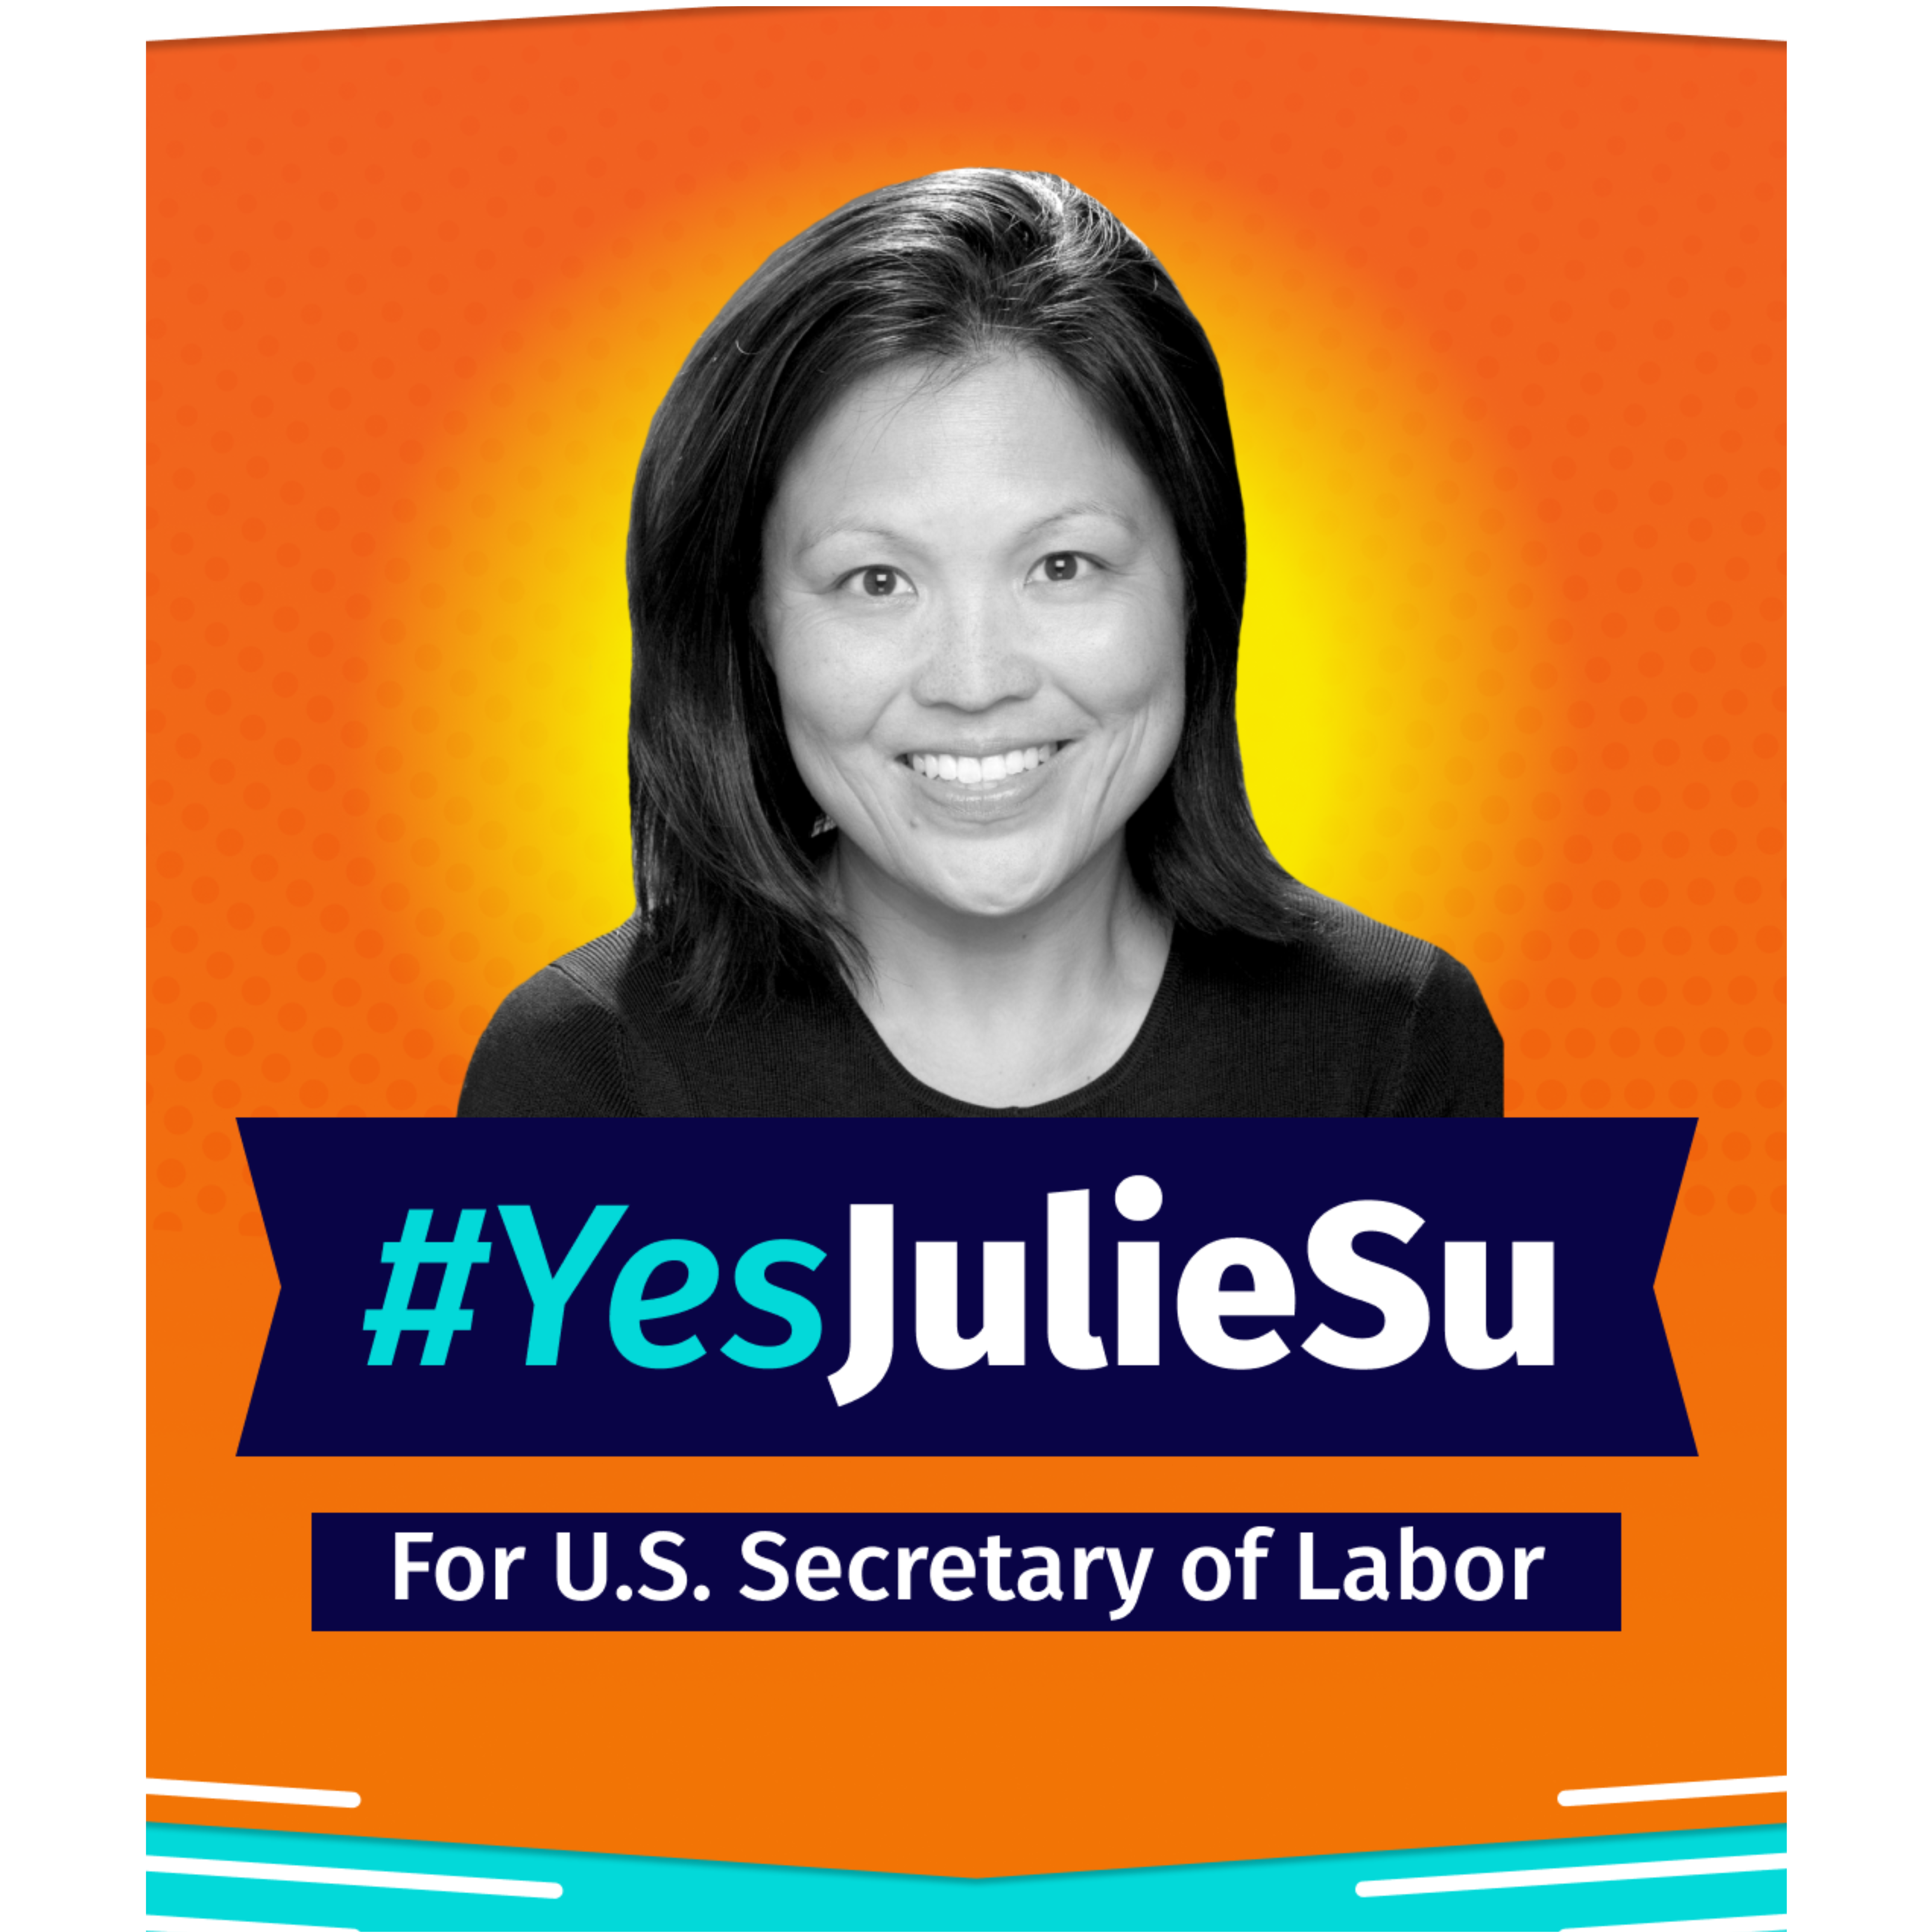 Who's Julie Su?